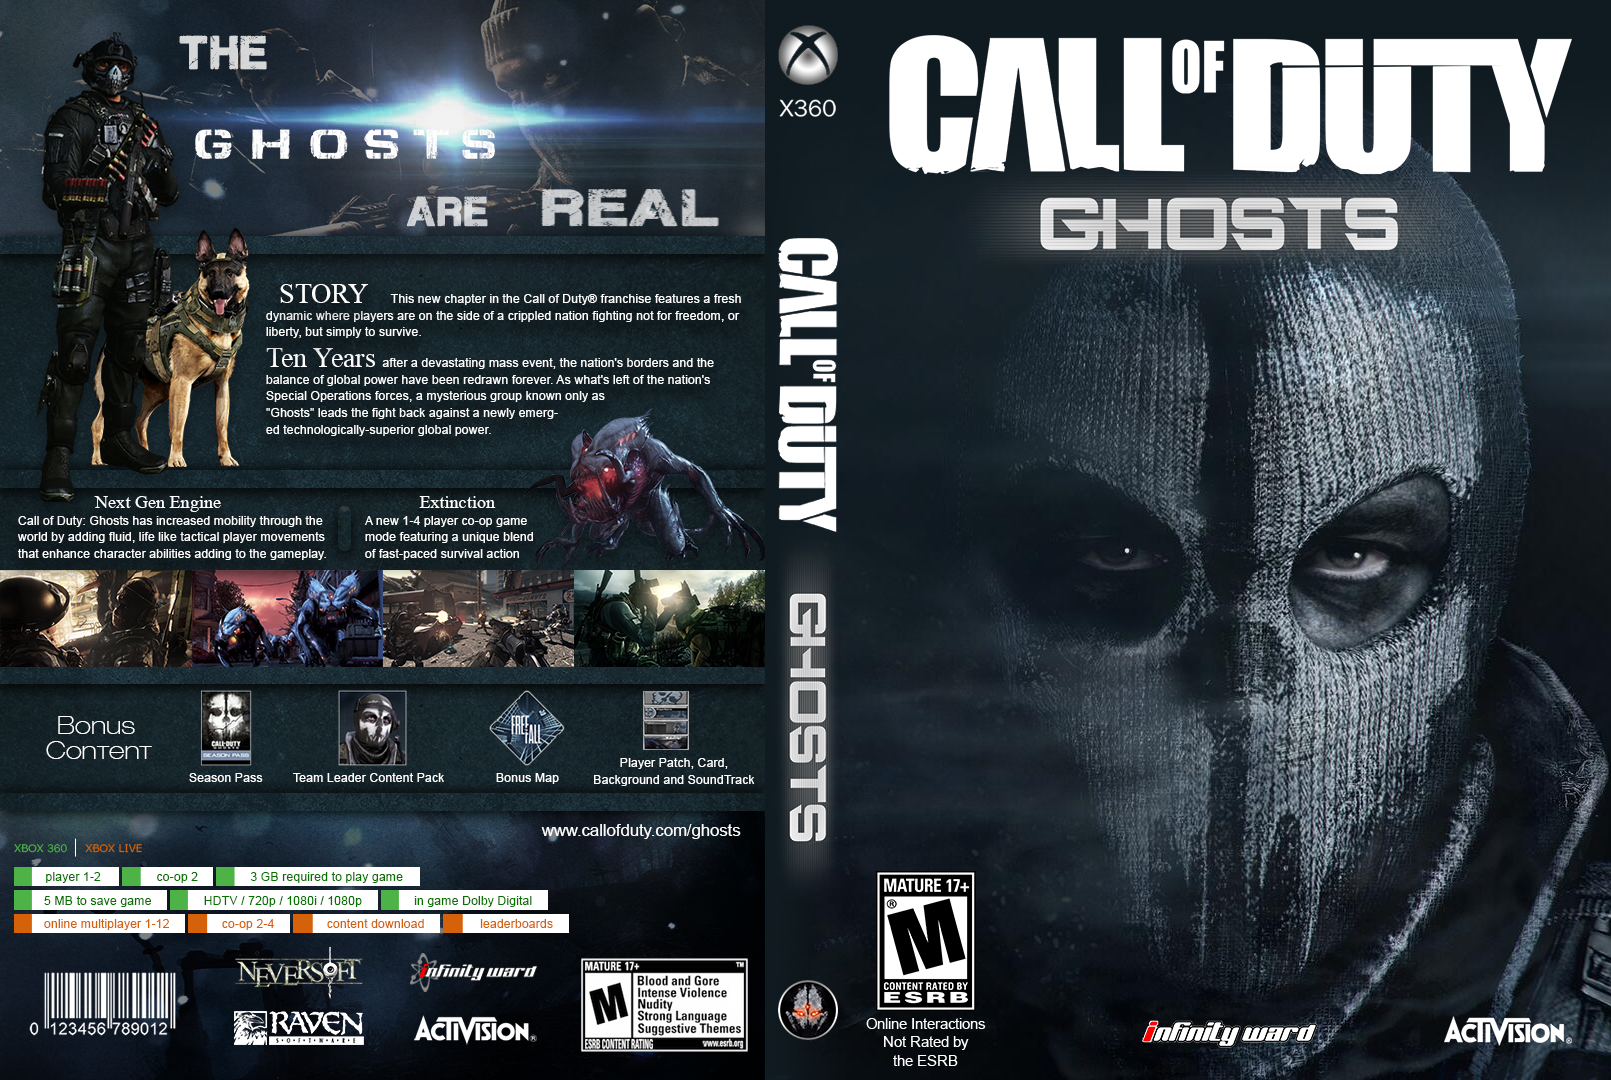 Код игры 360. Call of Duty Ghosts Xbox 360. Call of Duty диск на иксбокс 360. Call of Duty Ghosts Xbox 360 обложка. Call of Duty диск на Xbox 360.